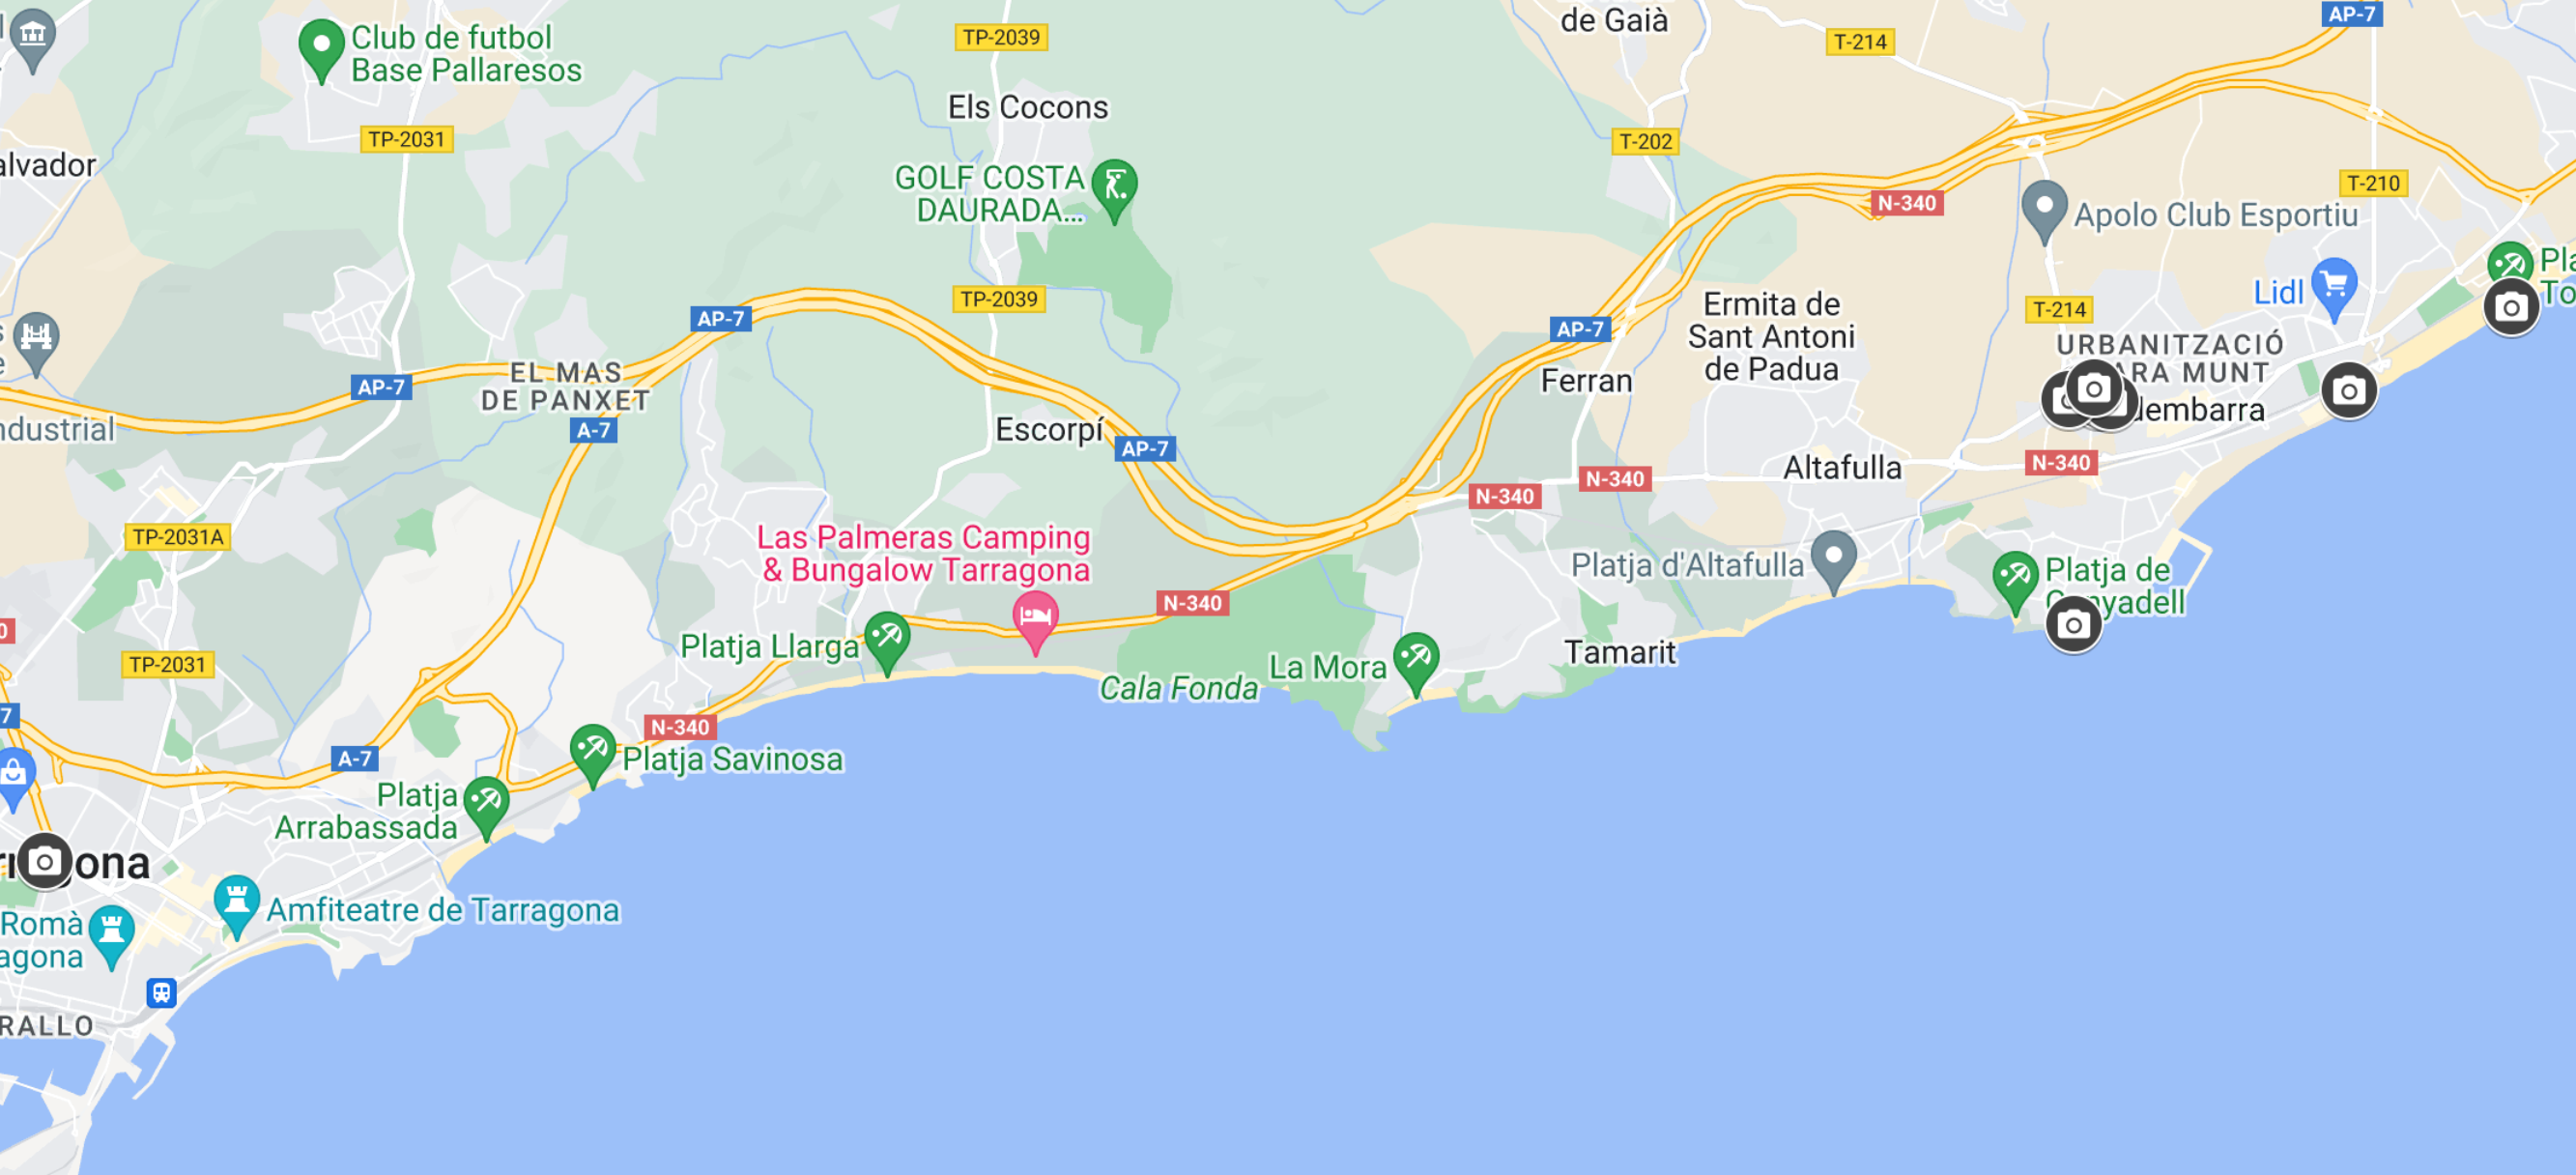 Google Maps Torredembarra Spain